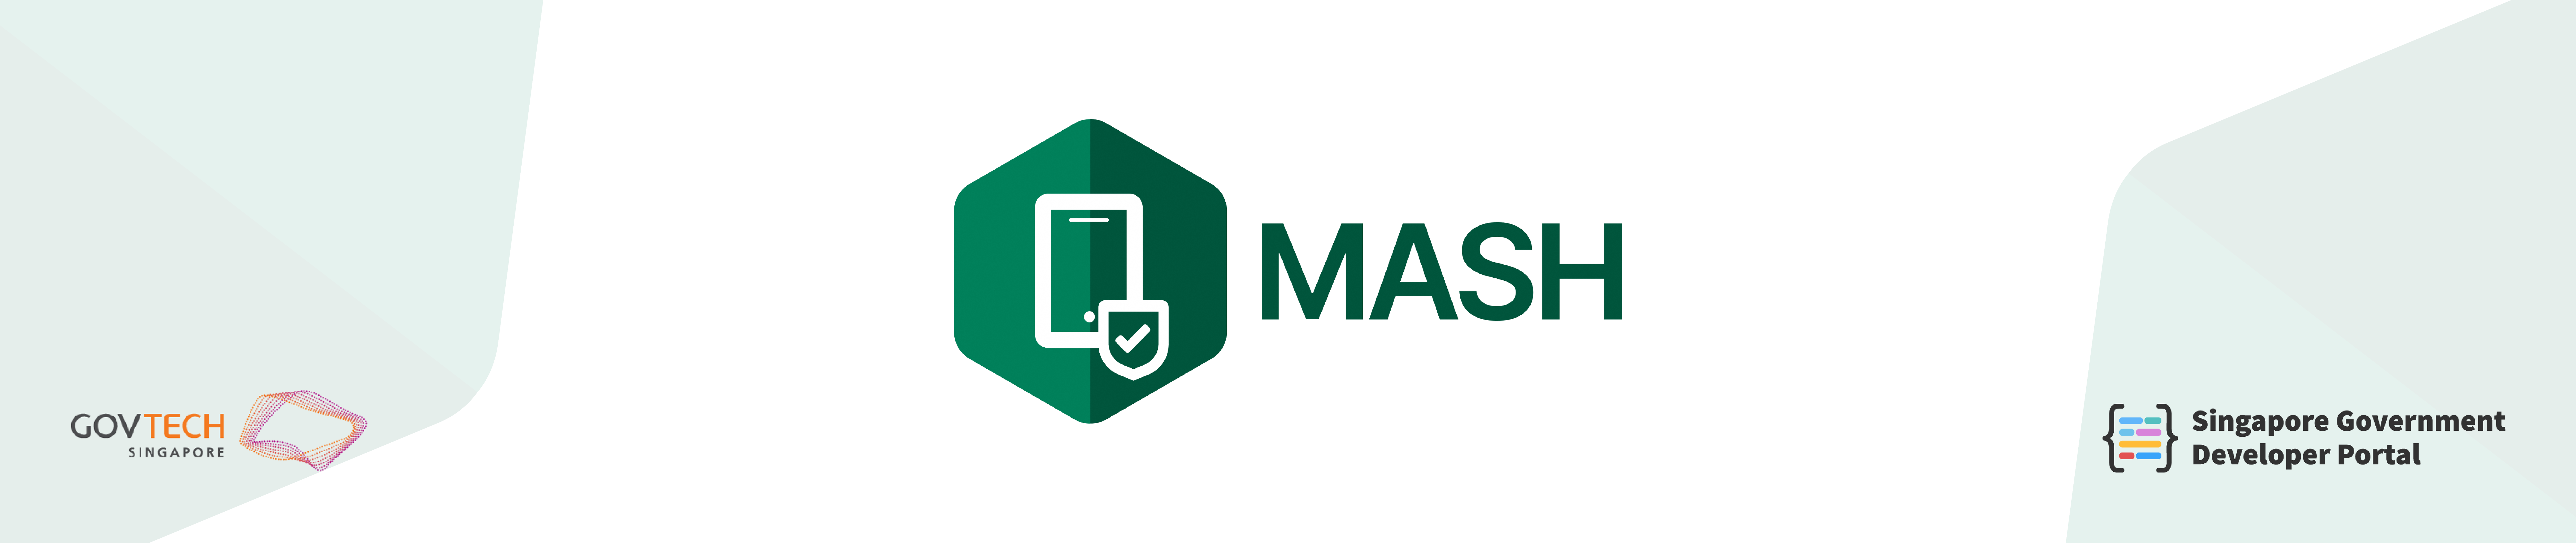 MASH header banner